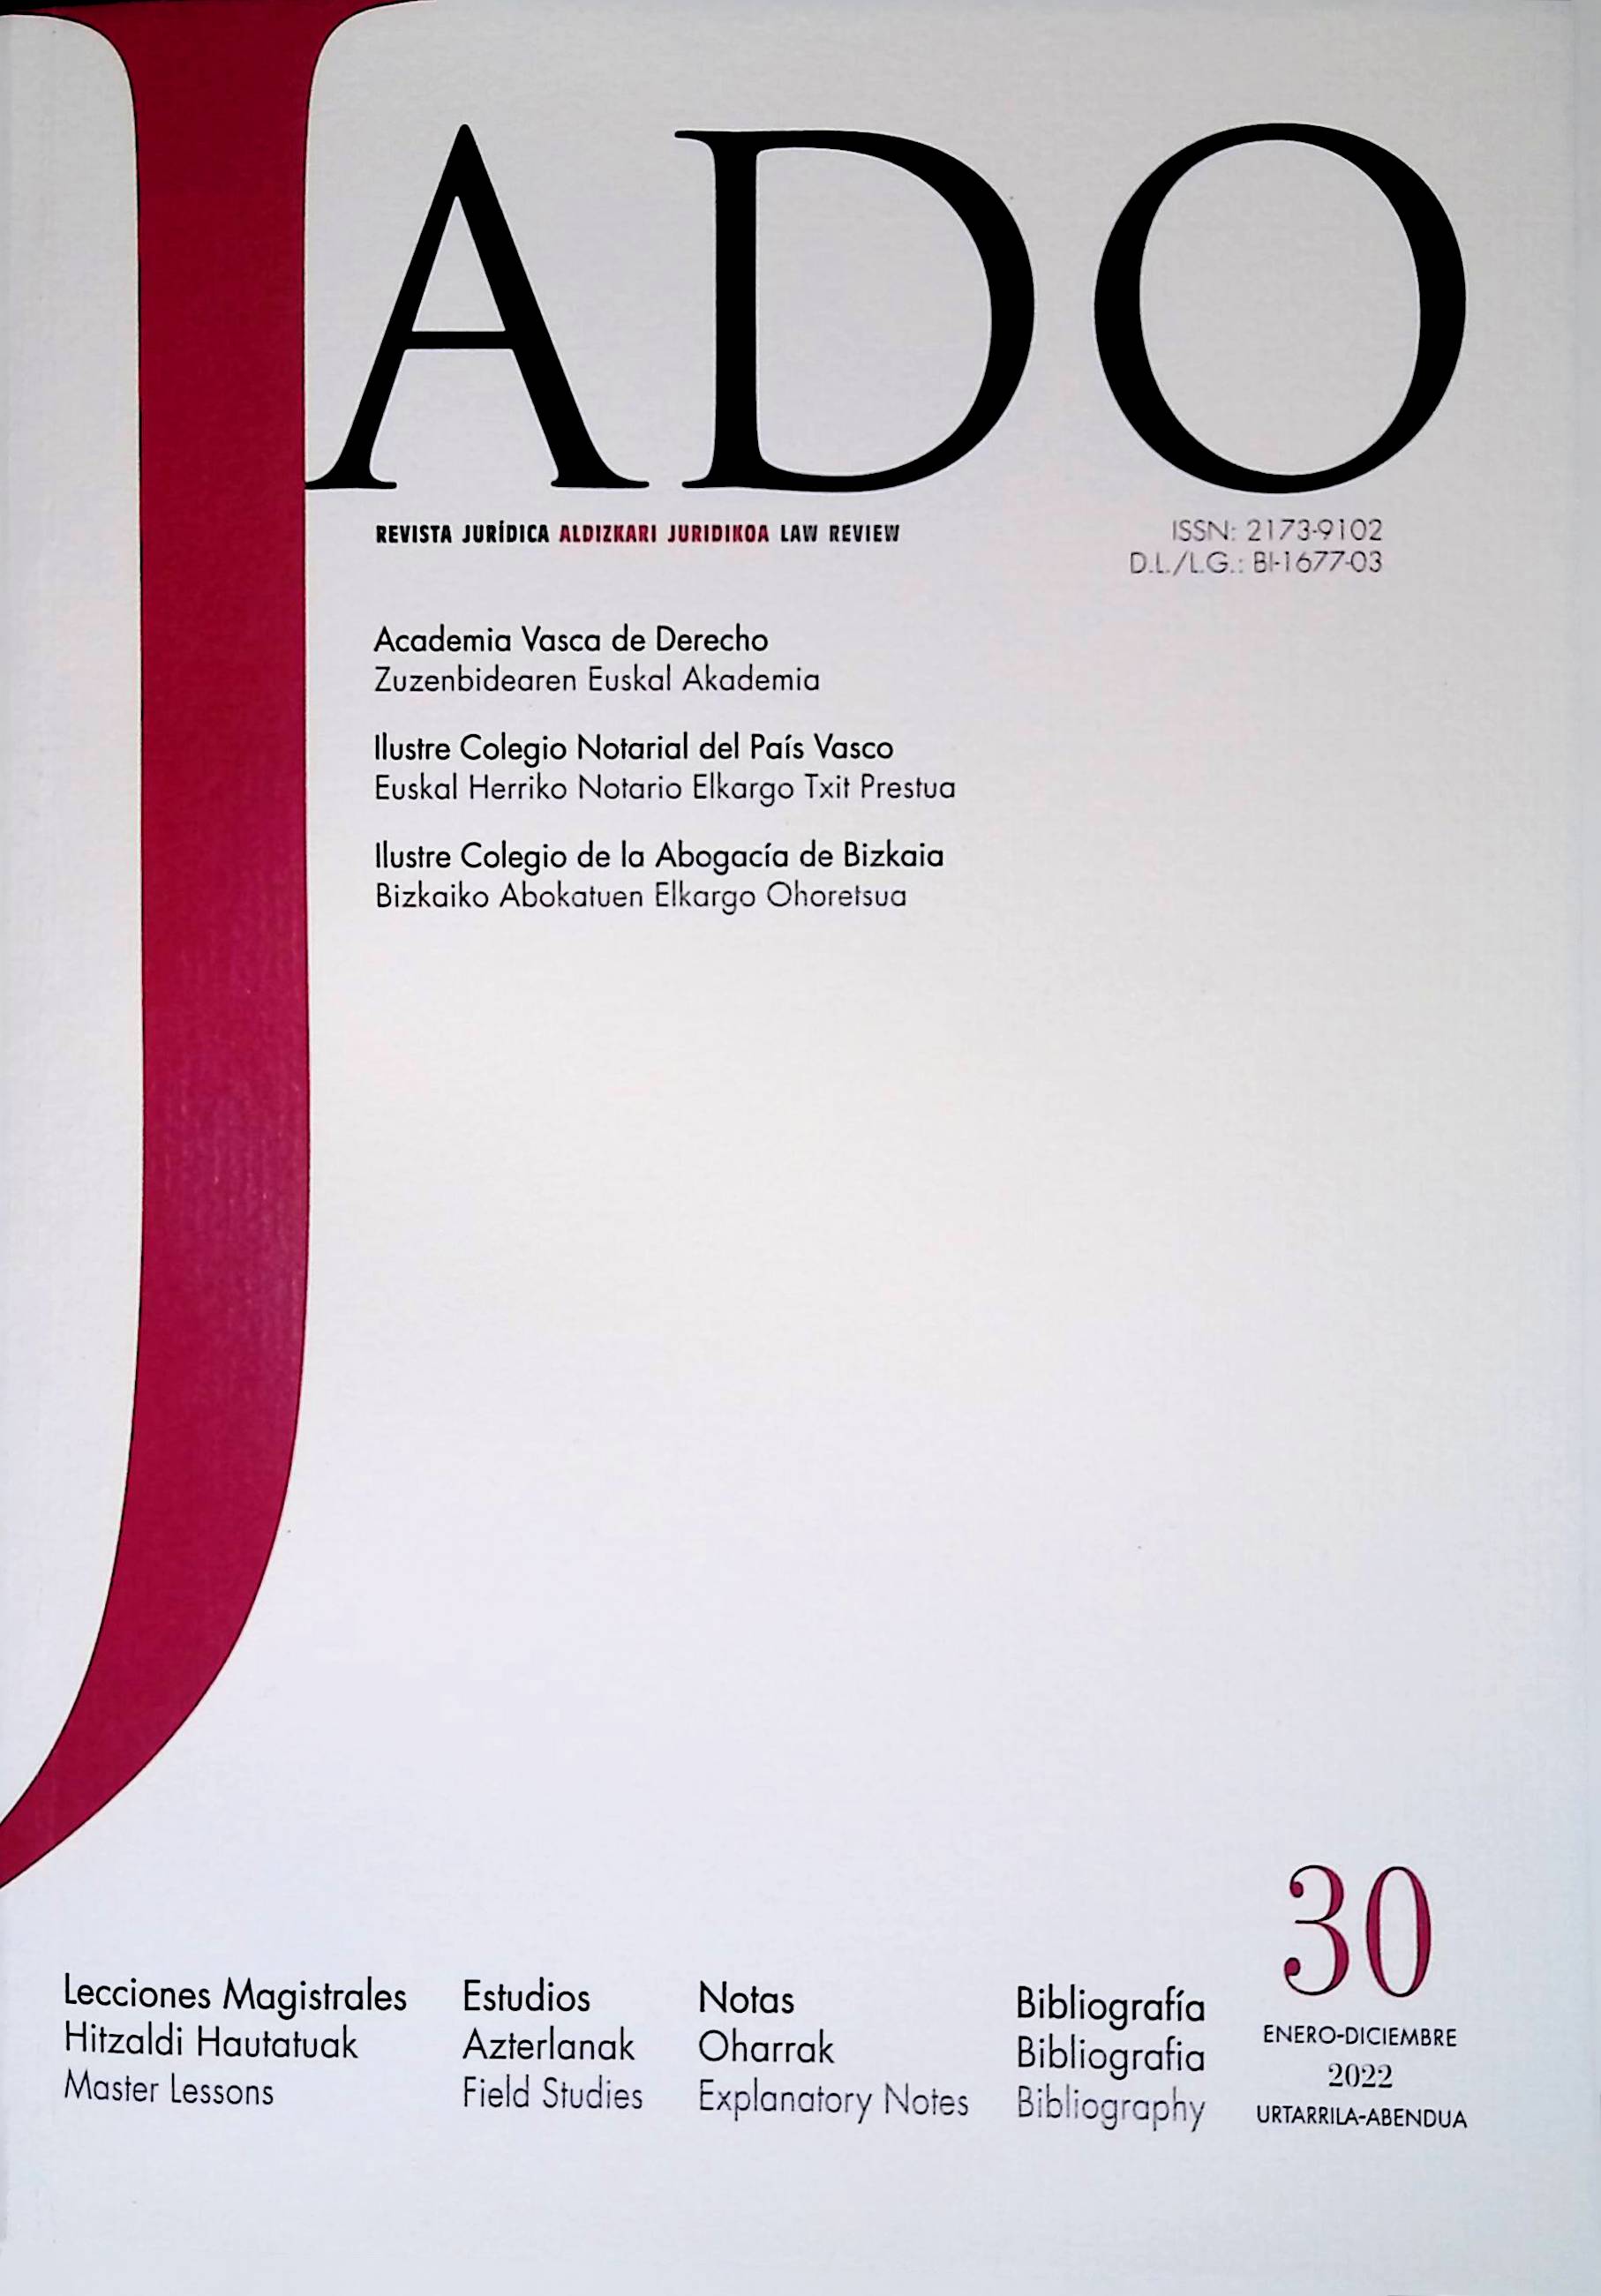 JADO - Revista 30